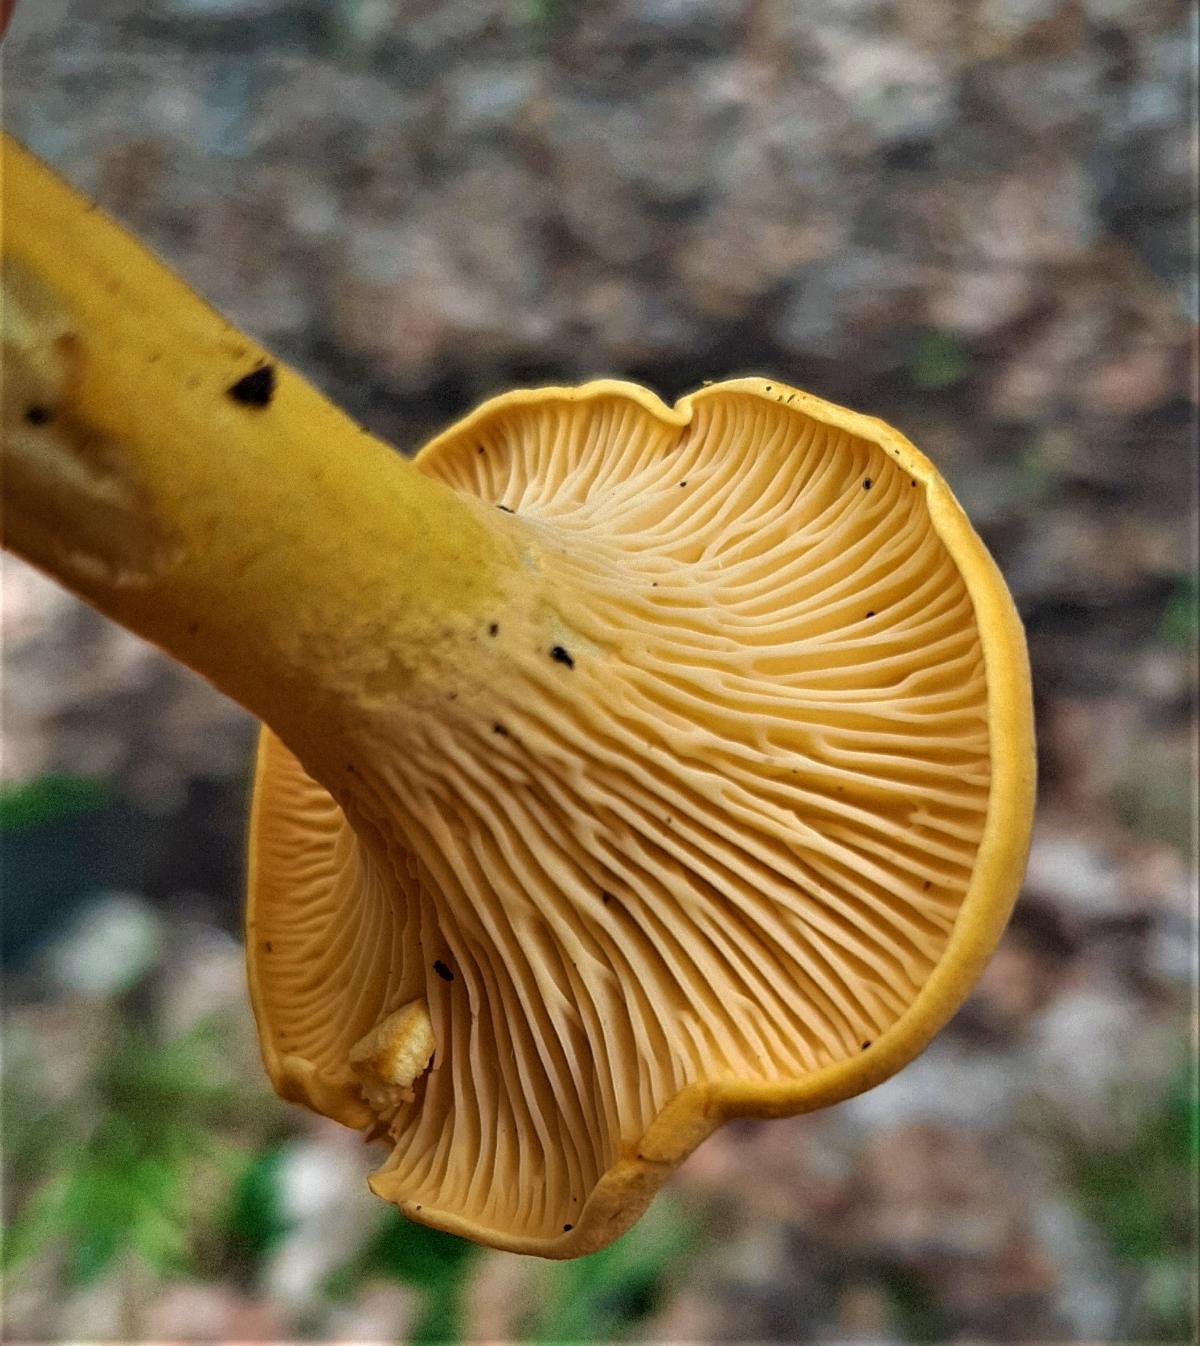 Chanterelle mushroom in hand